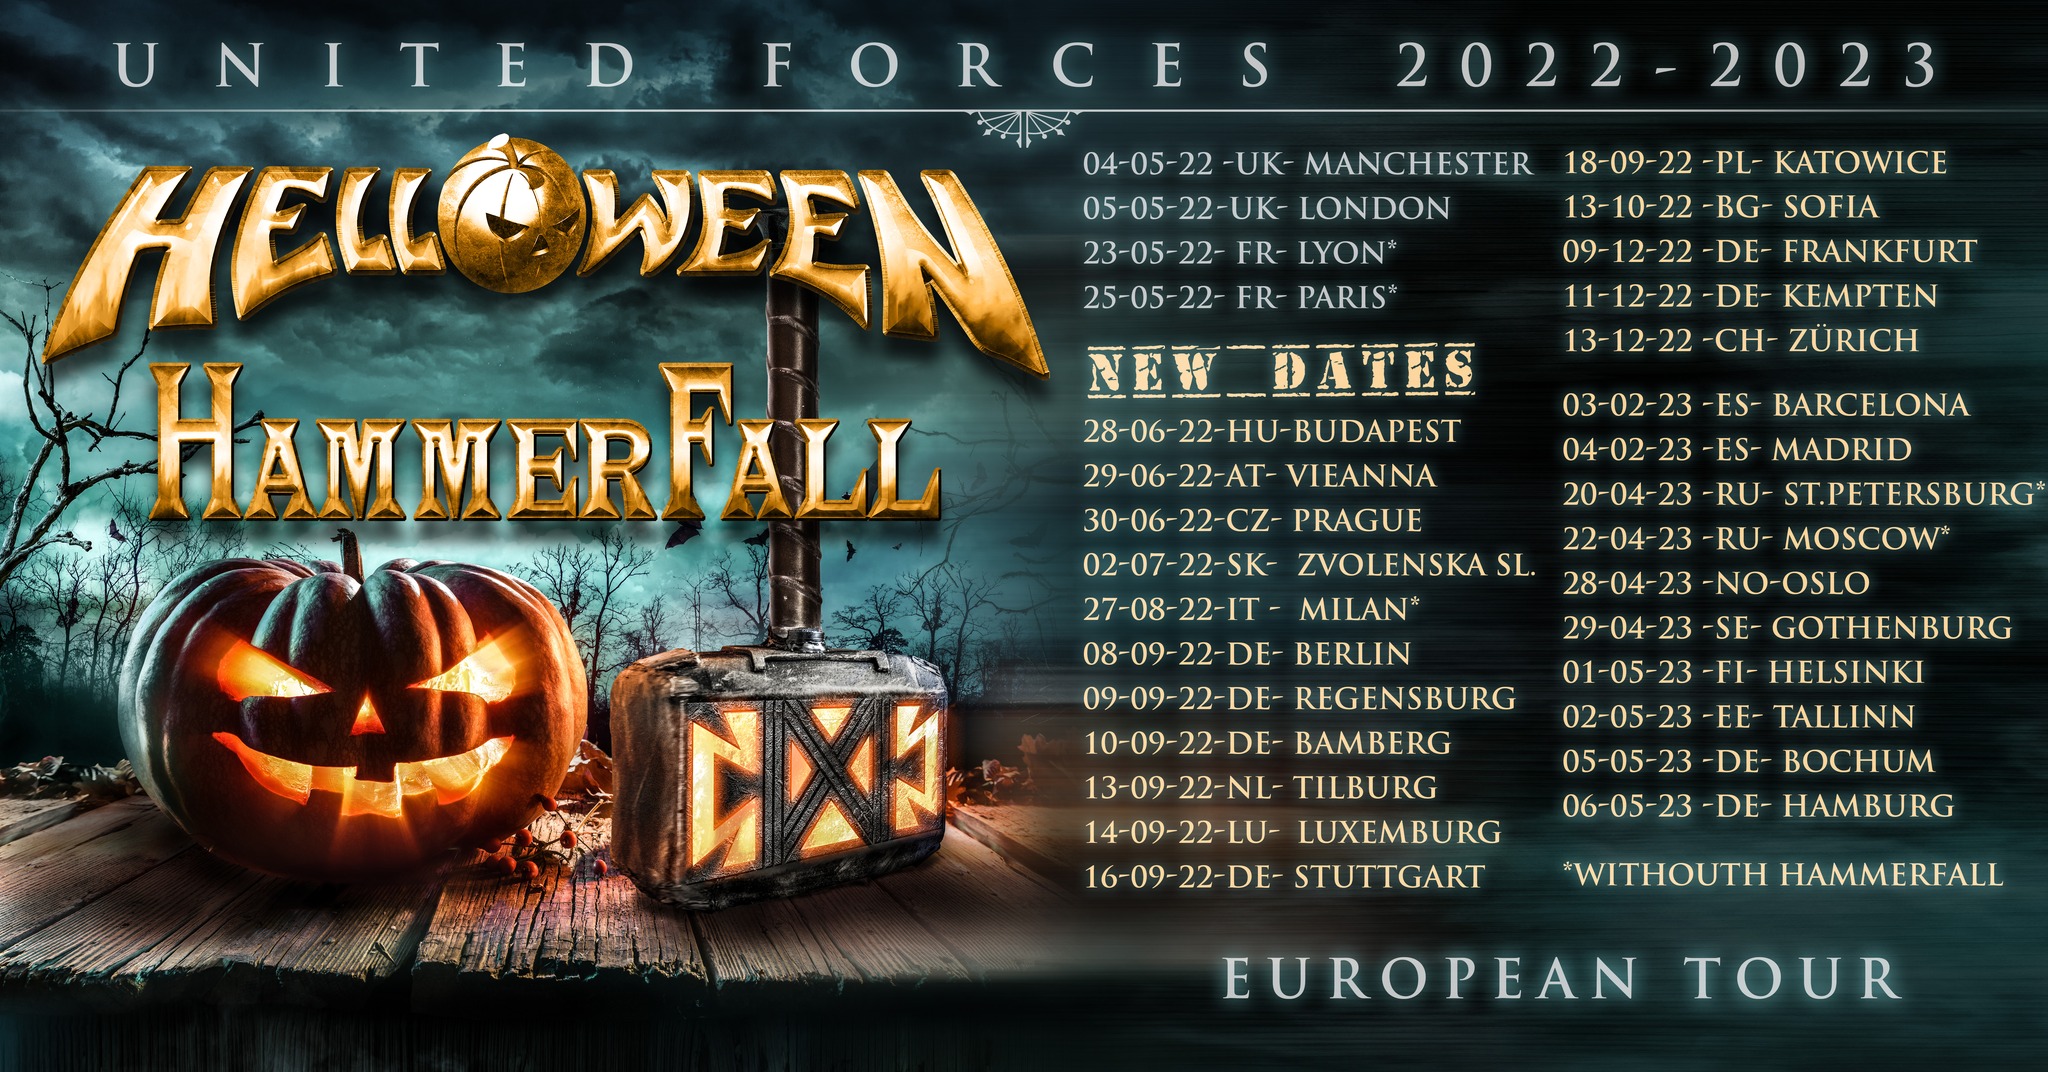 Flyer der Hammerfall & Helloween - United Forces Tour 2022 -2023